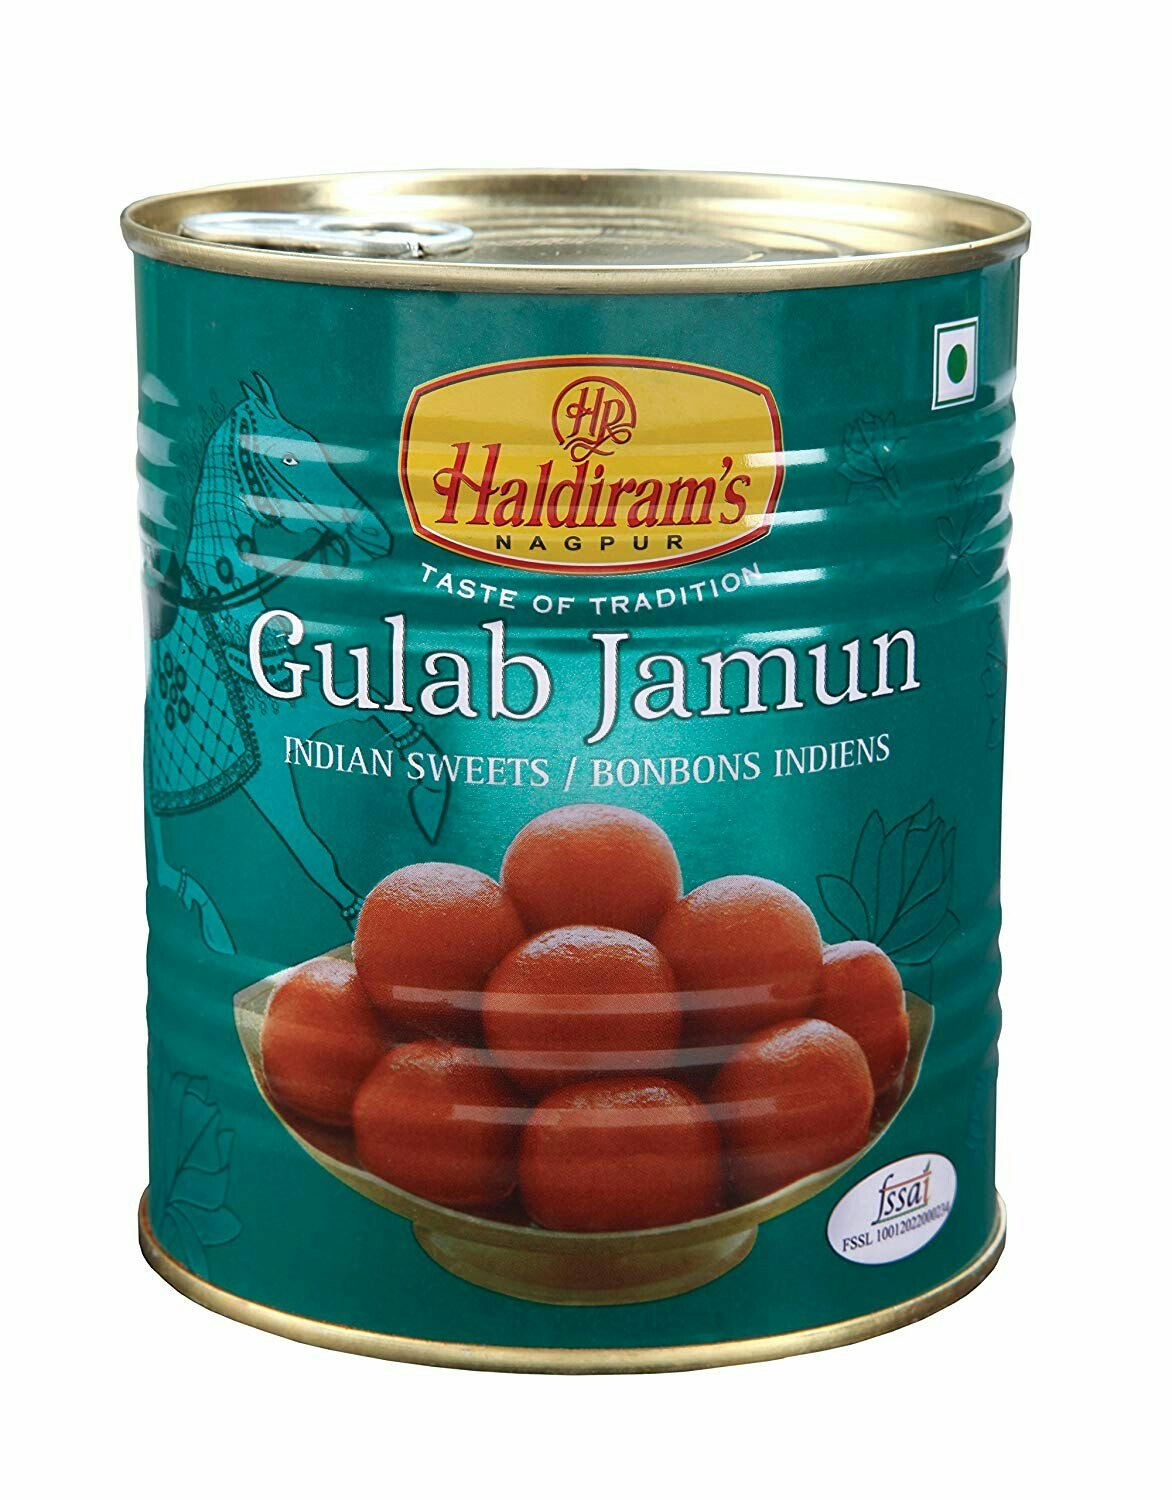 Gulab Jamun(Haldiram's) -1kg